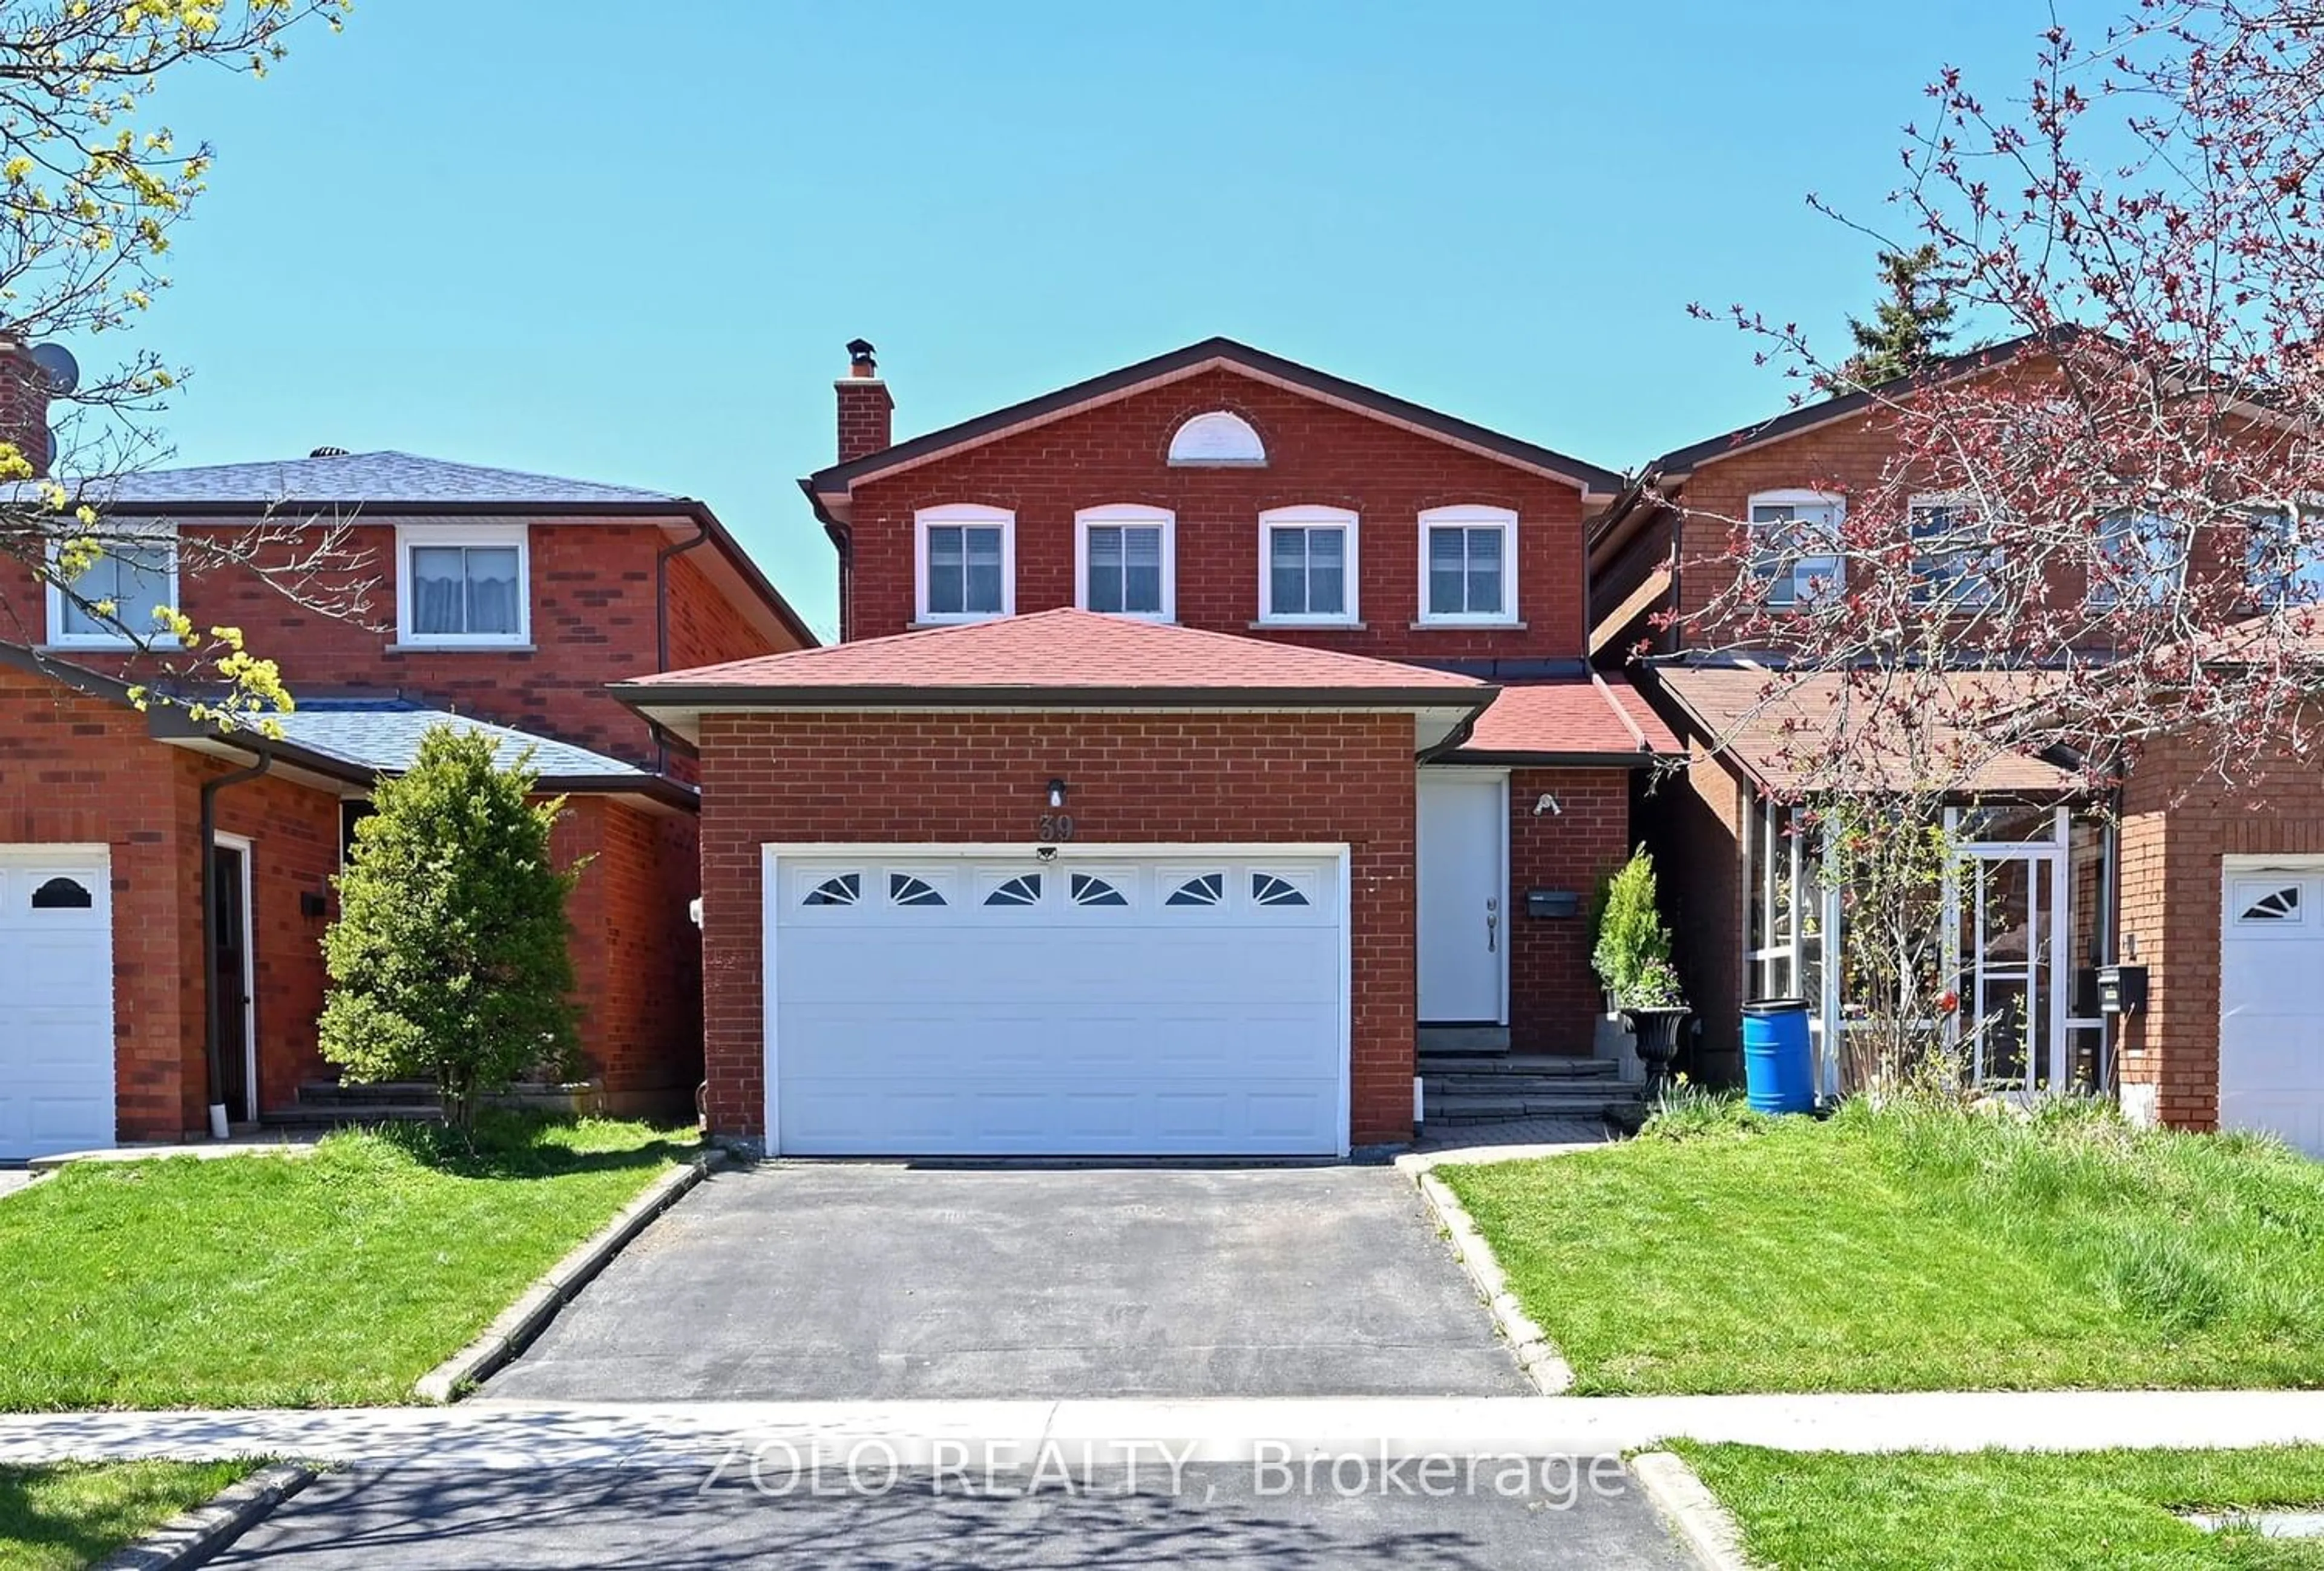 Home with brick exterior material for 39 Rainthorpe Cres, Toronto Ontario M1W 3S6